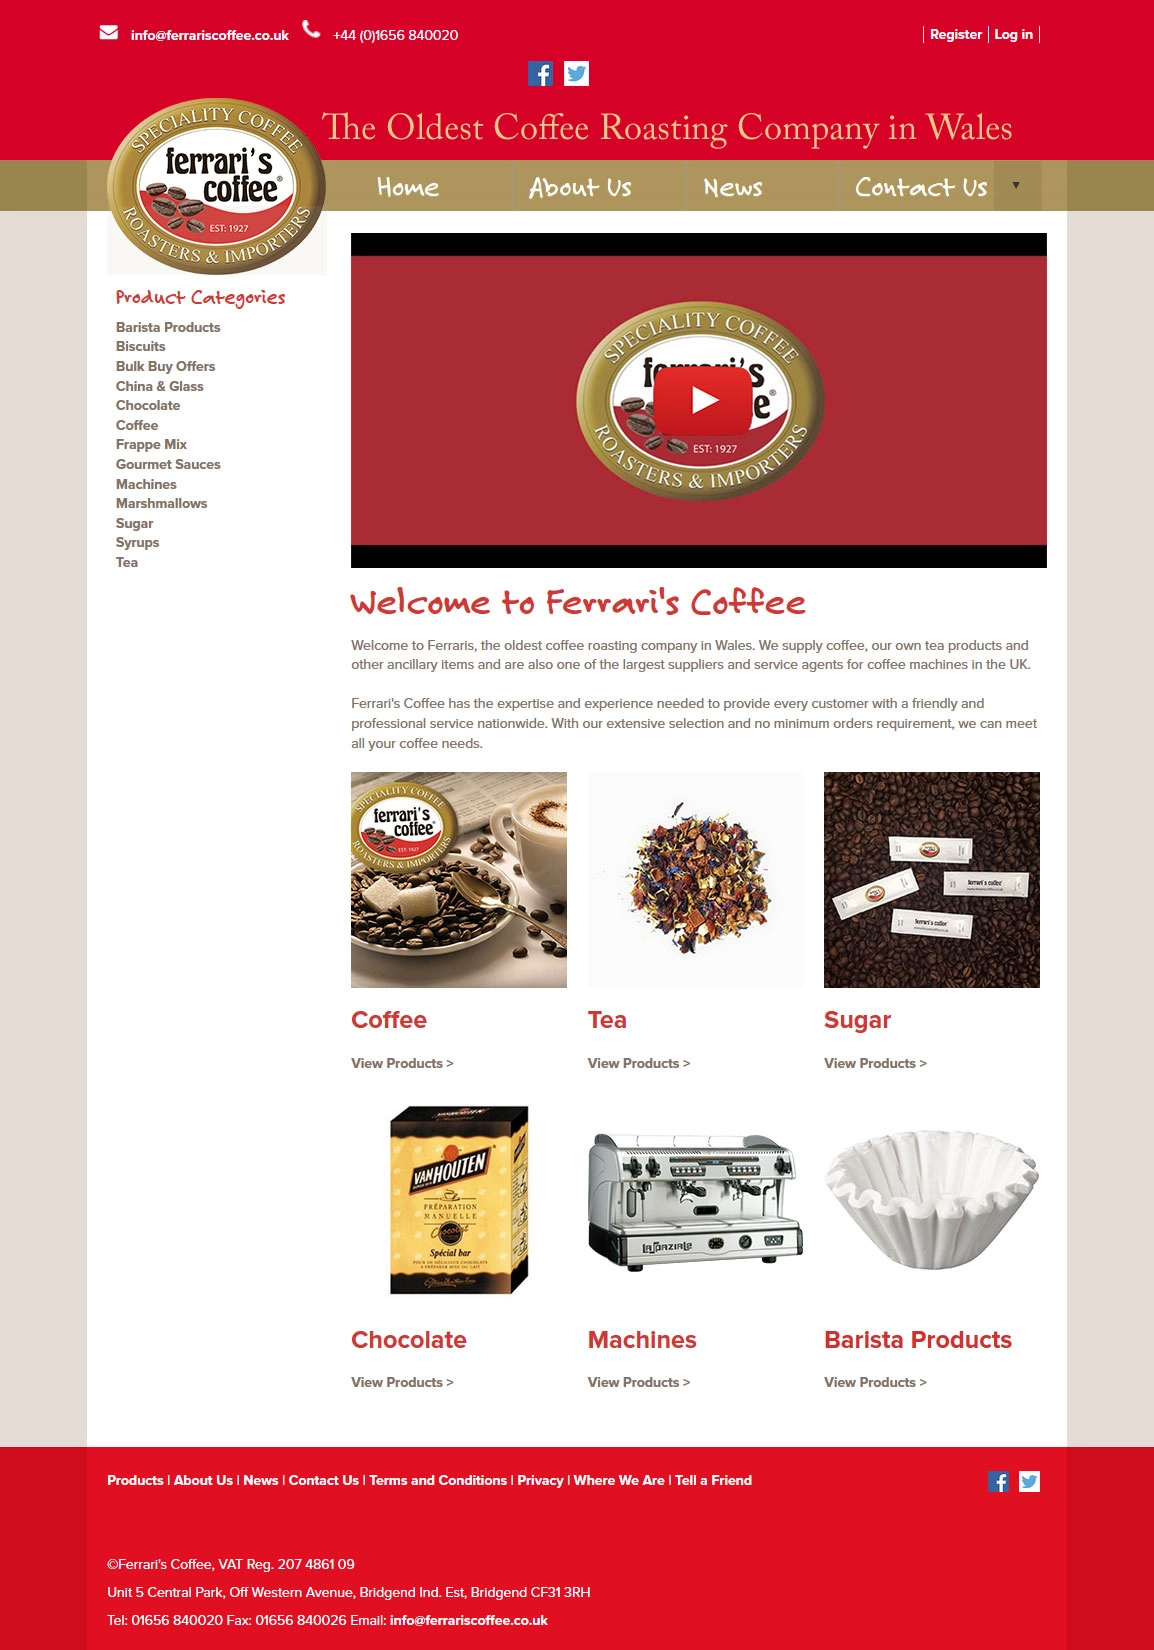 An image from Ferrari's Coffee website